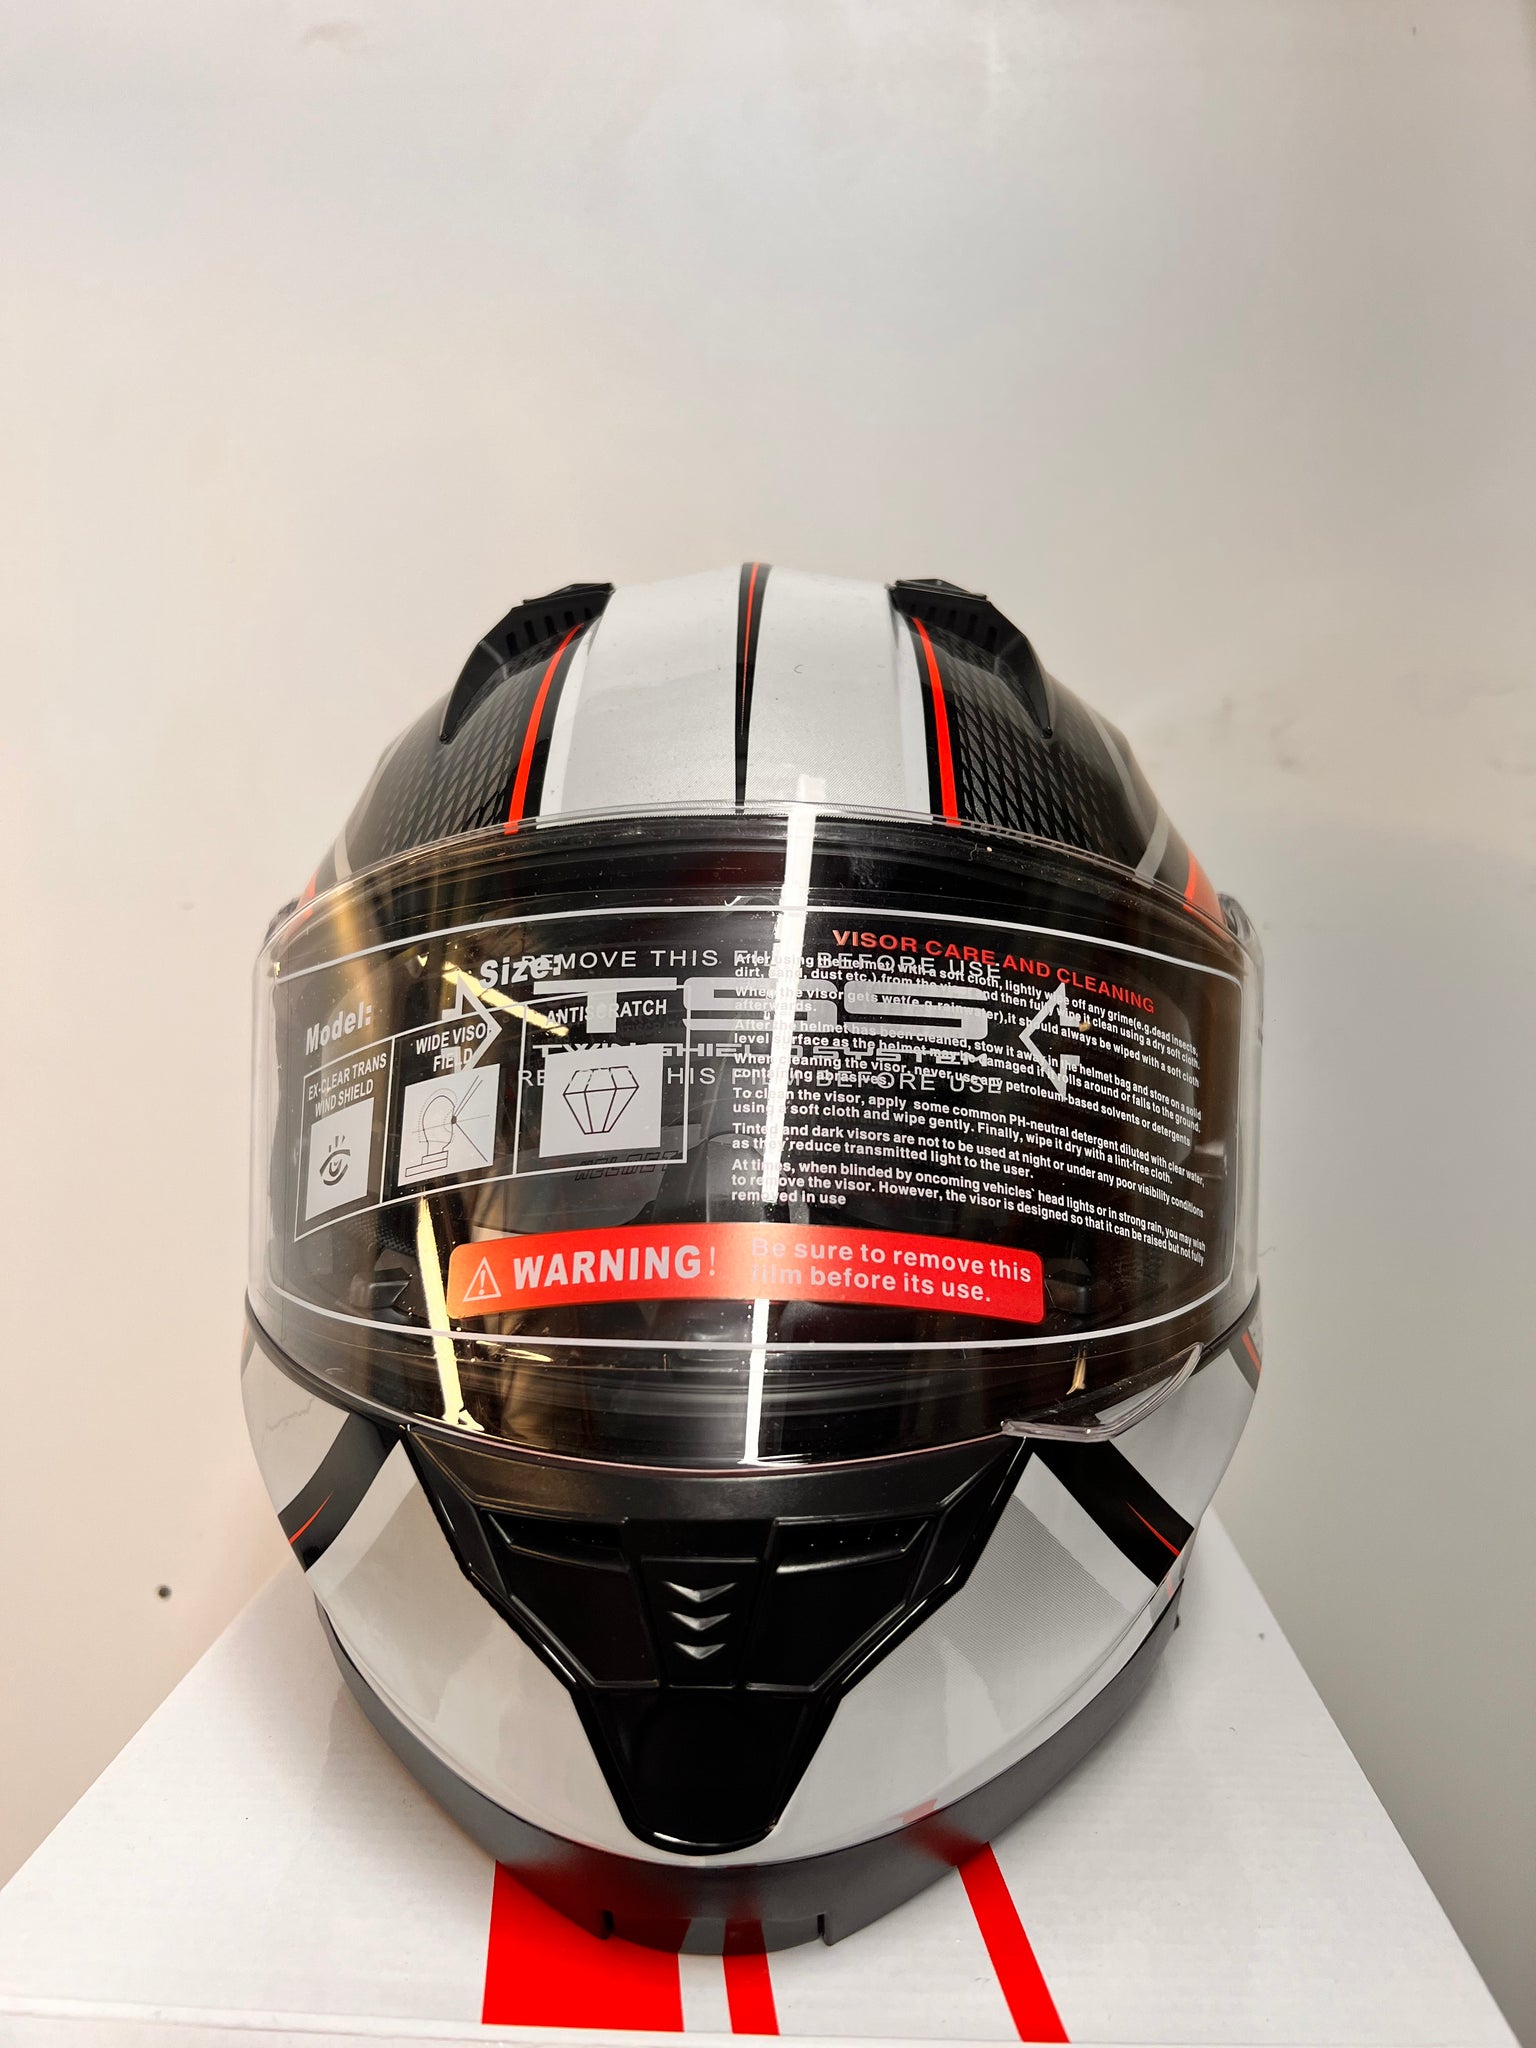 BFR Red Grey Black Modular Helmet